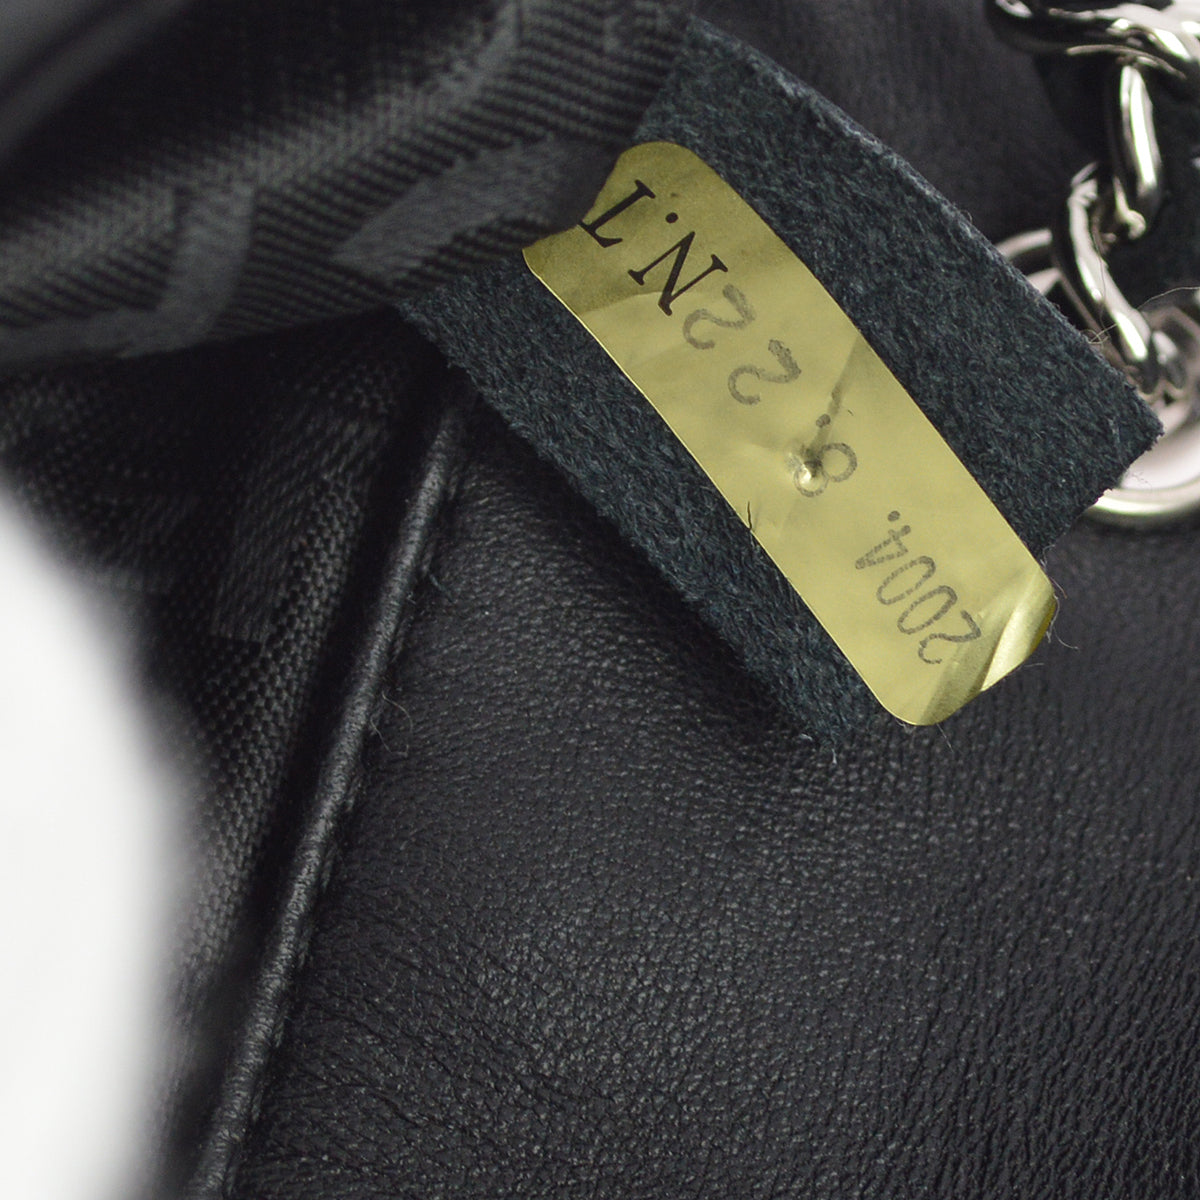 Chanel Black Satin Choco Bar Single Chain Shoulder Bag